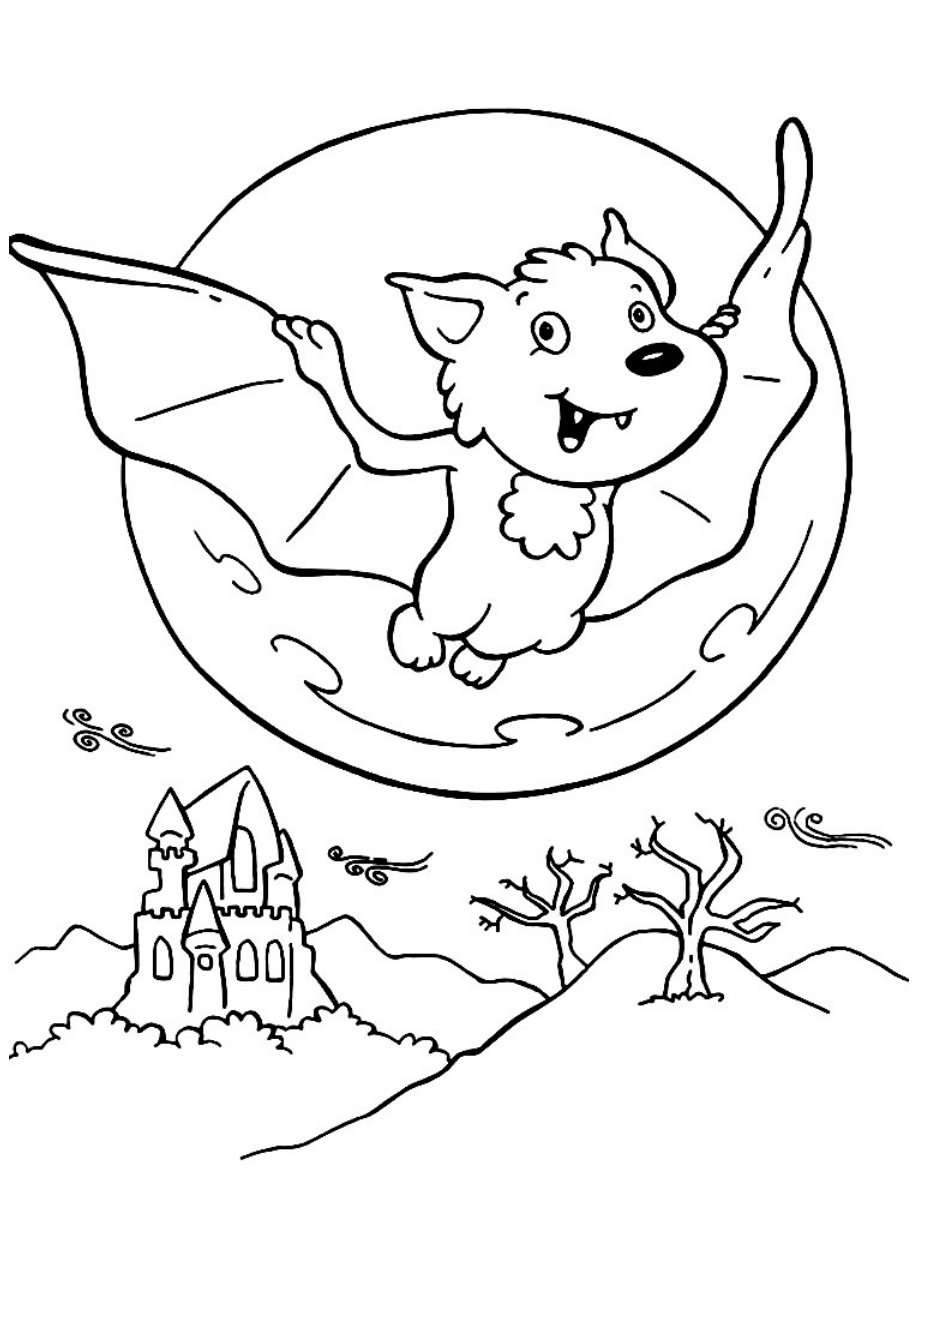 Halloween Coloring Sheet - Bat